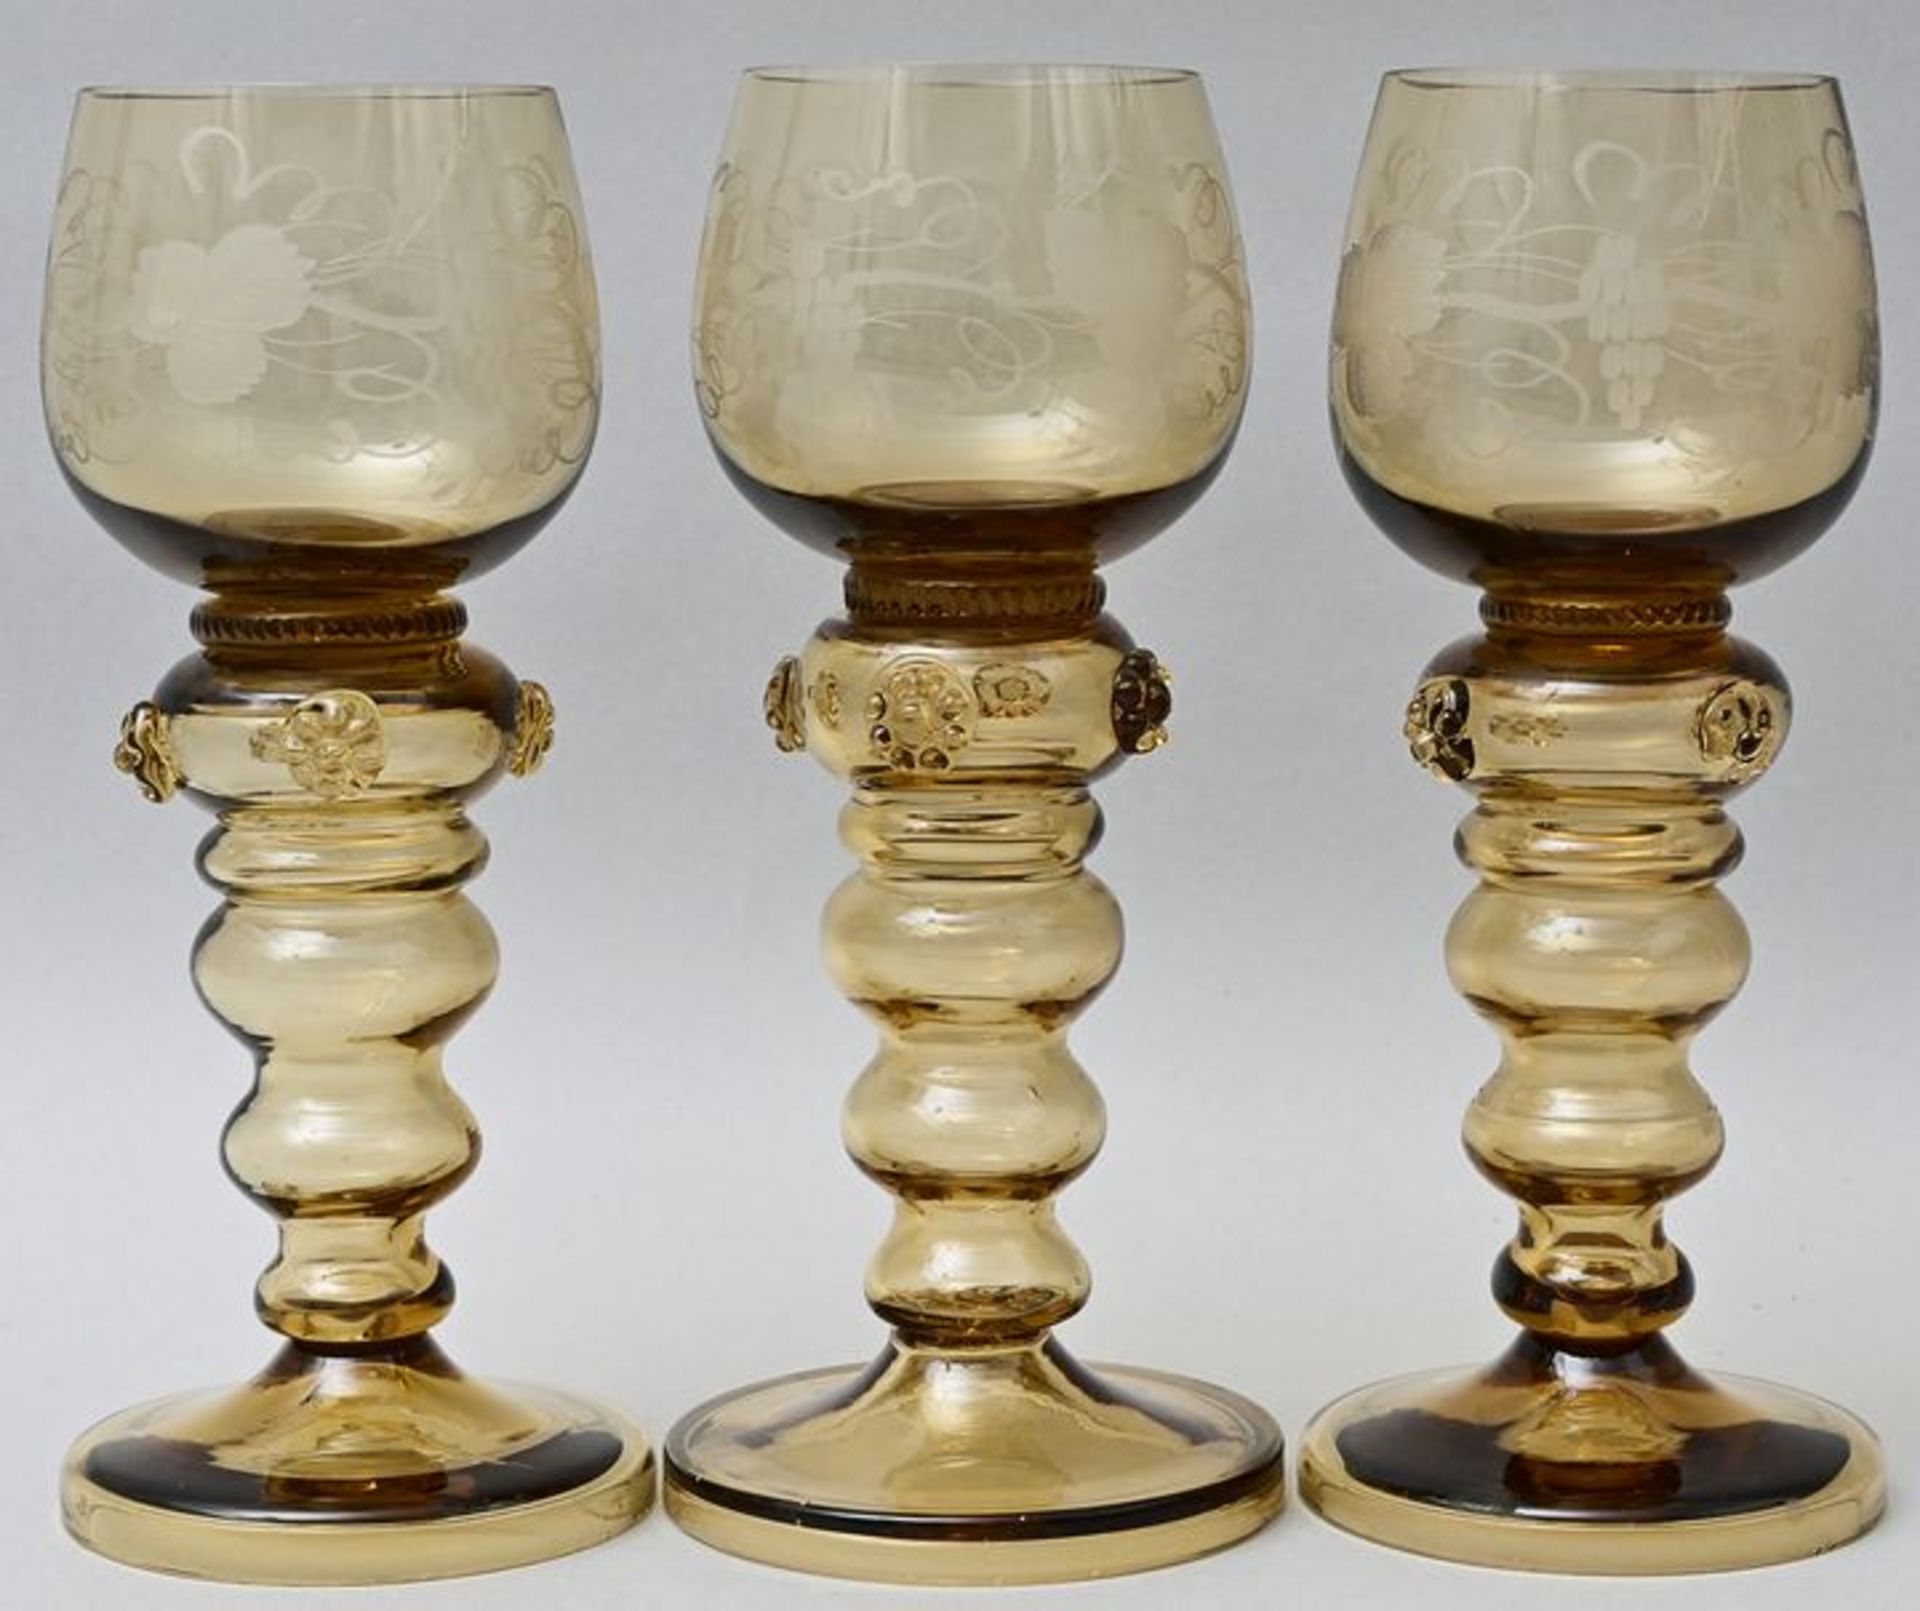 Drei Römer / Three roemer glasses